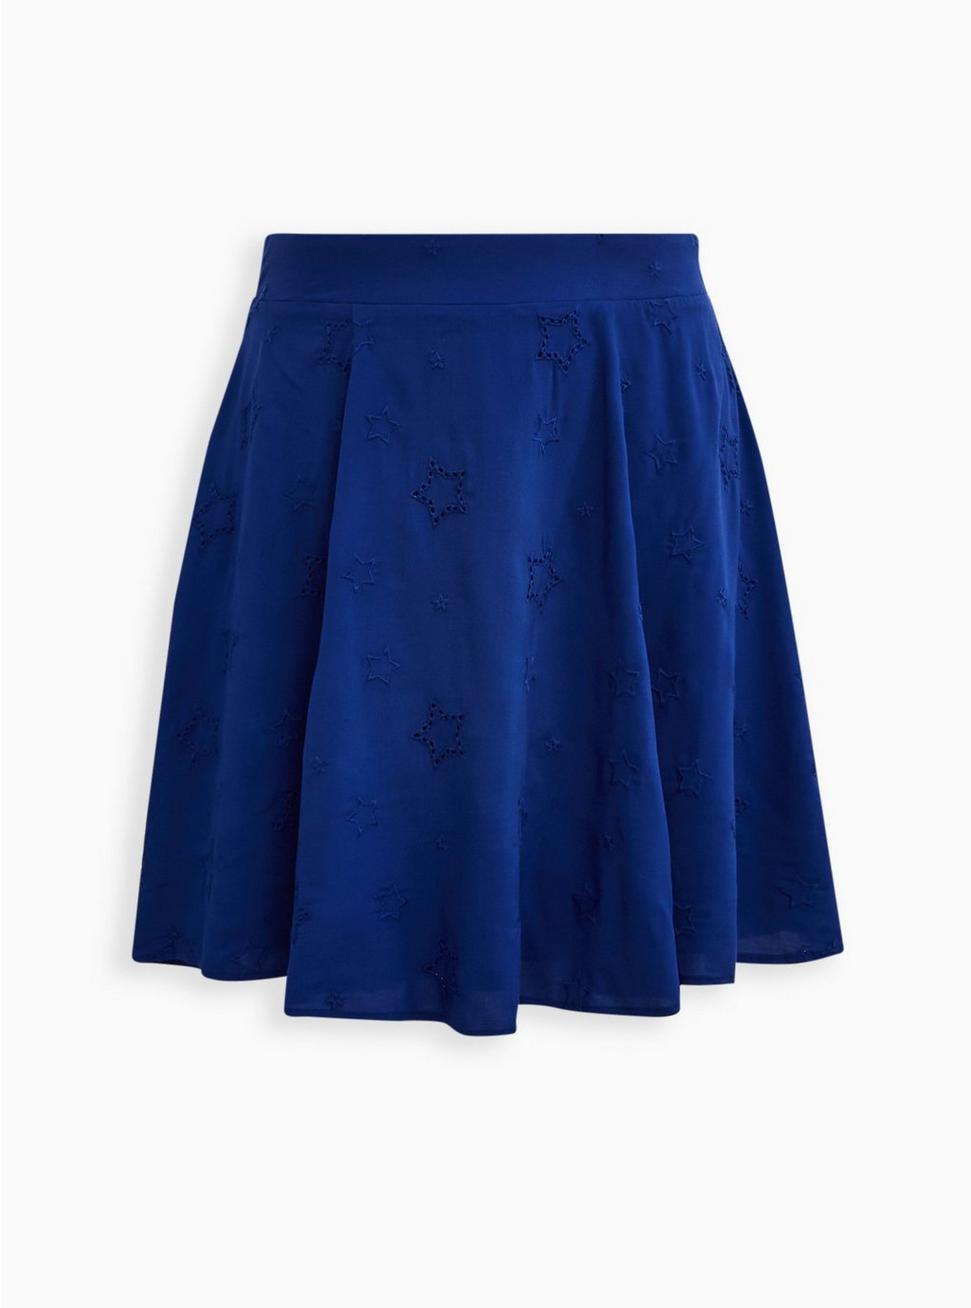 Embroidered Eyelet Skirt - Challis Blue , SODALITE BLUE, hi-res